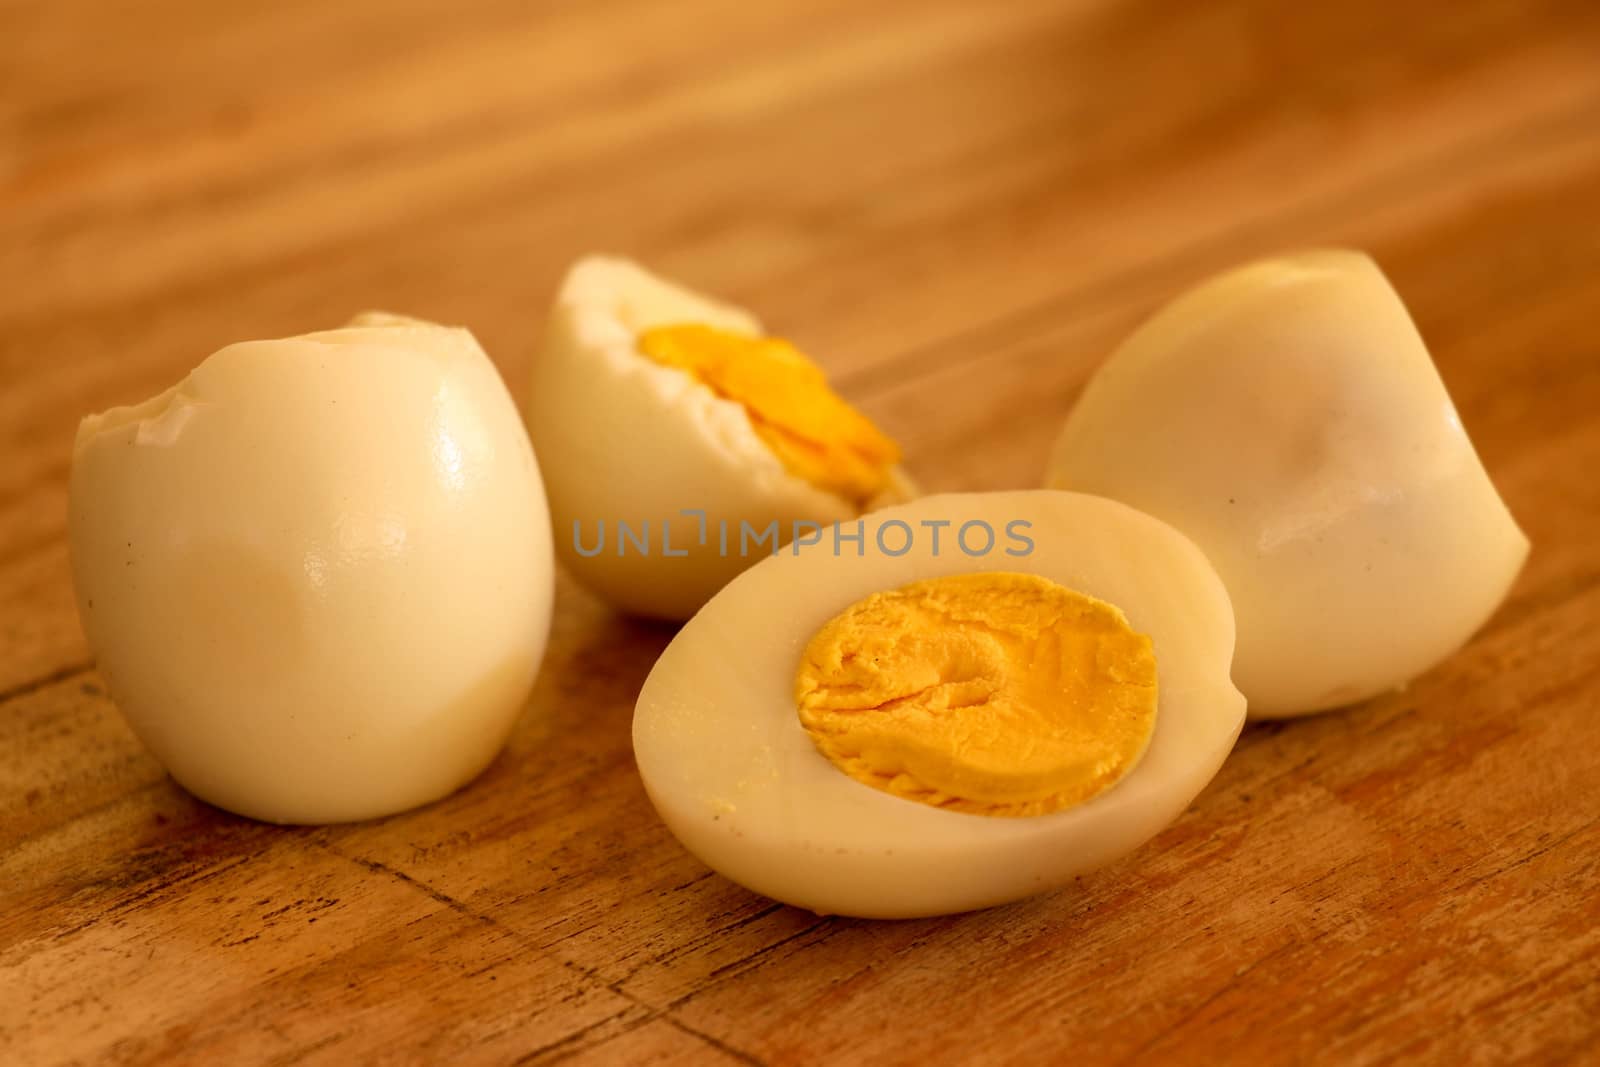 Hard boiled eggs, sliced in halves on wooden background.